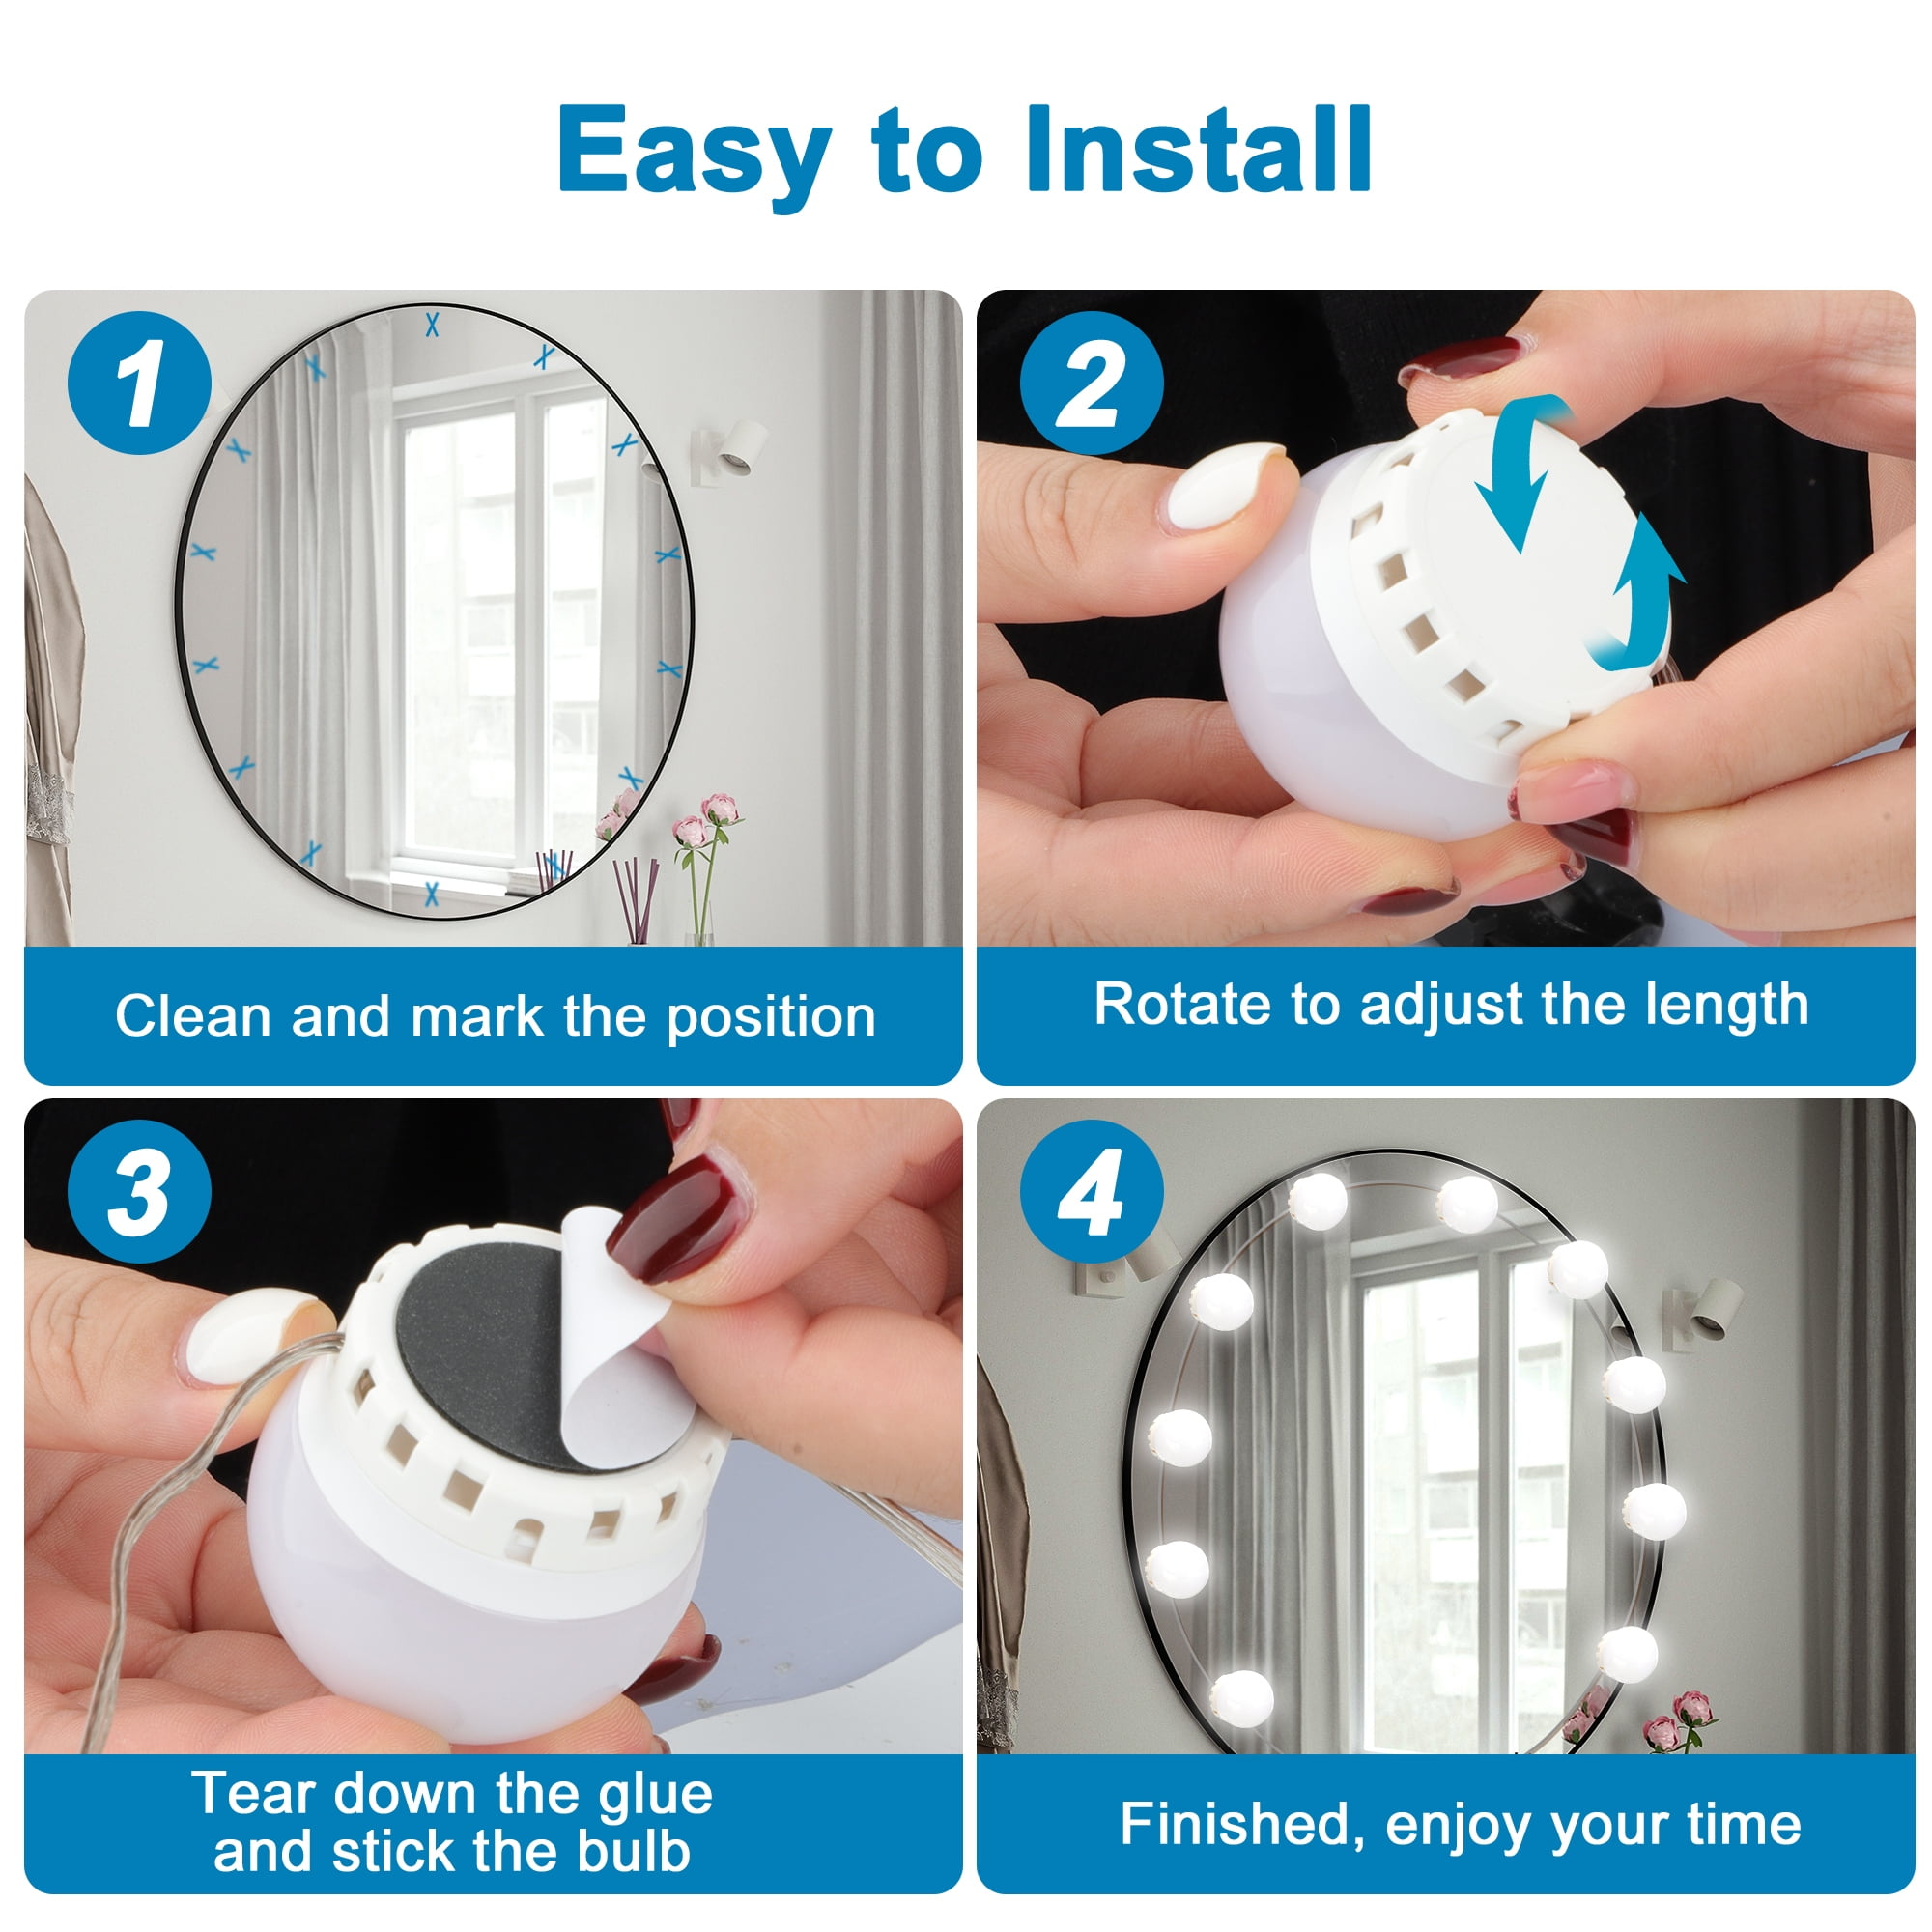 10 Bulb LED Vanity Mirror Lights - Baig Store - Home Décor